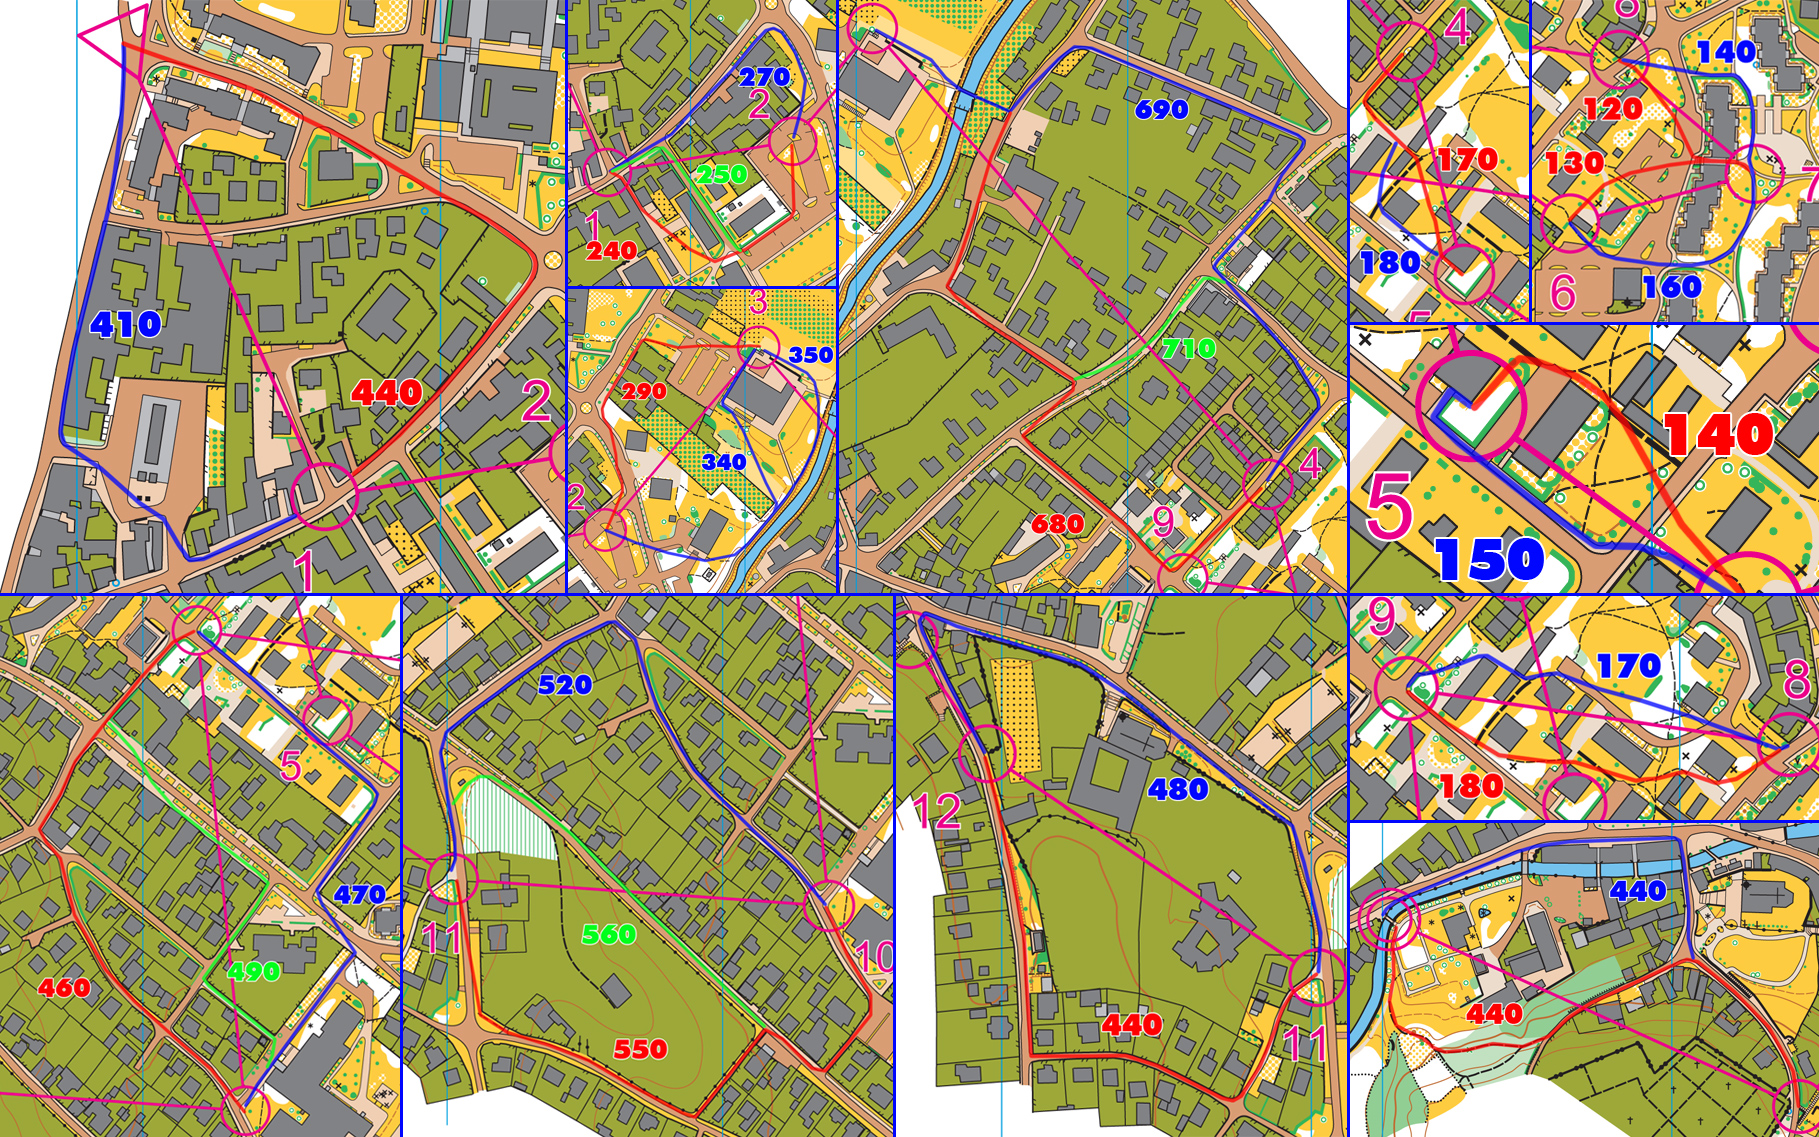 Samobor sprint - routechoices (2014-05-23)